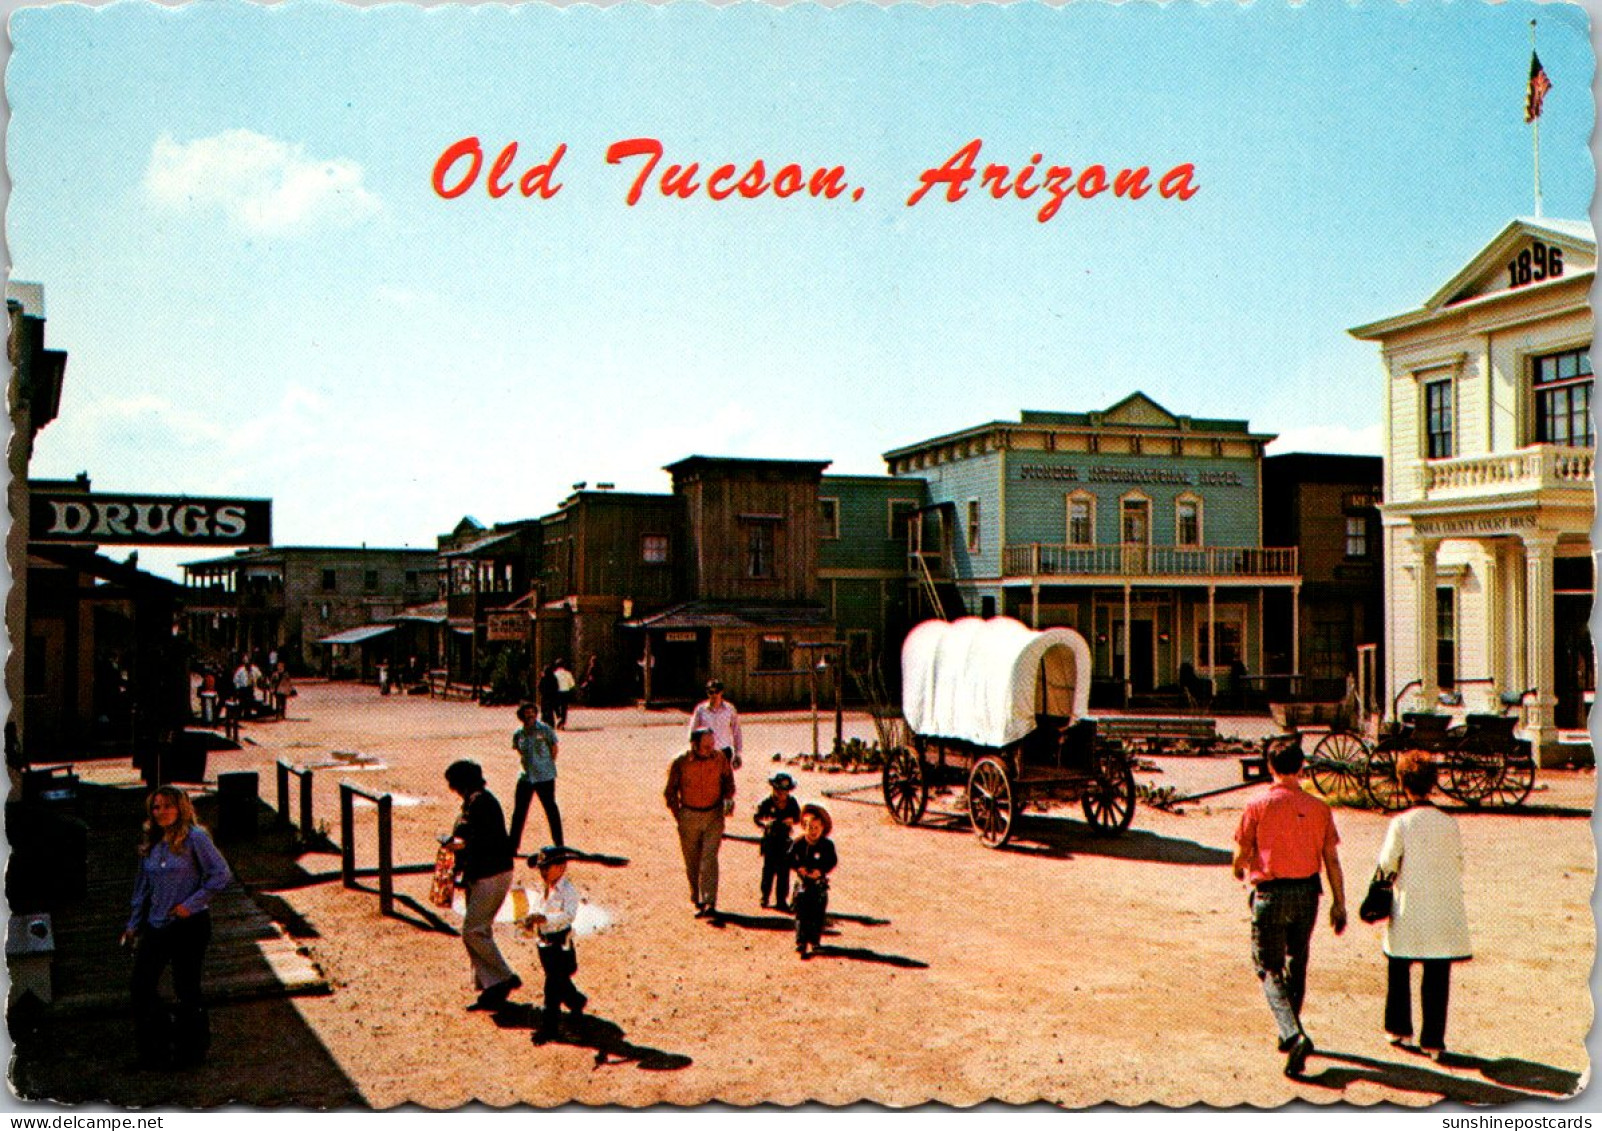 Arizona Old Tucson Famous Movie Set Street Scene - Tucson